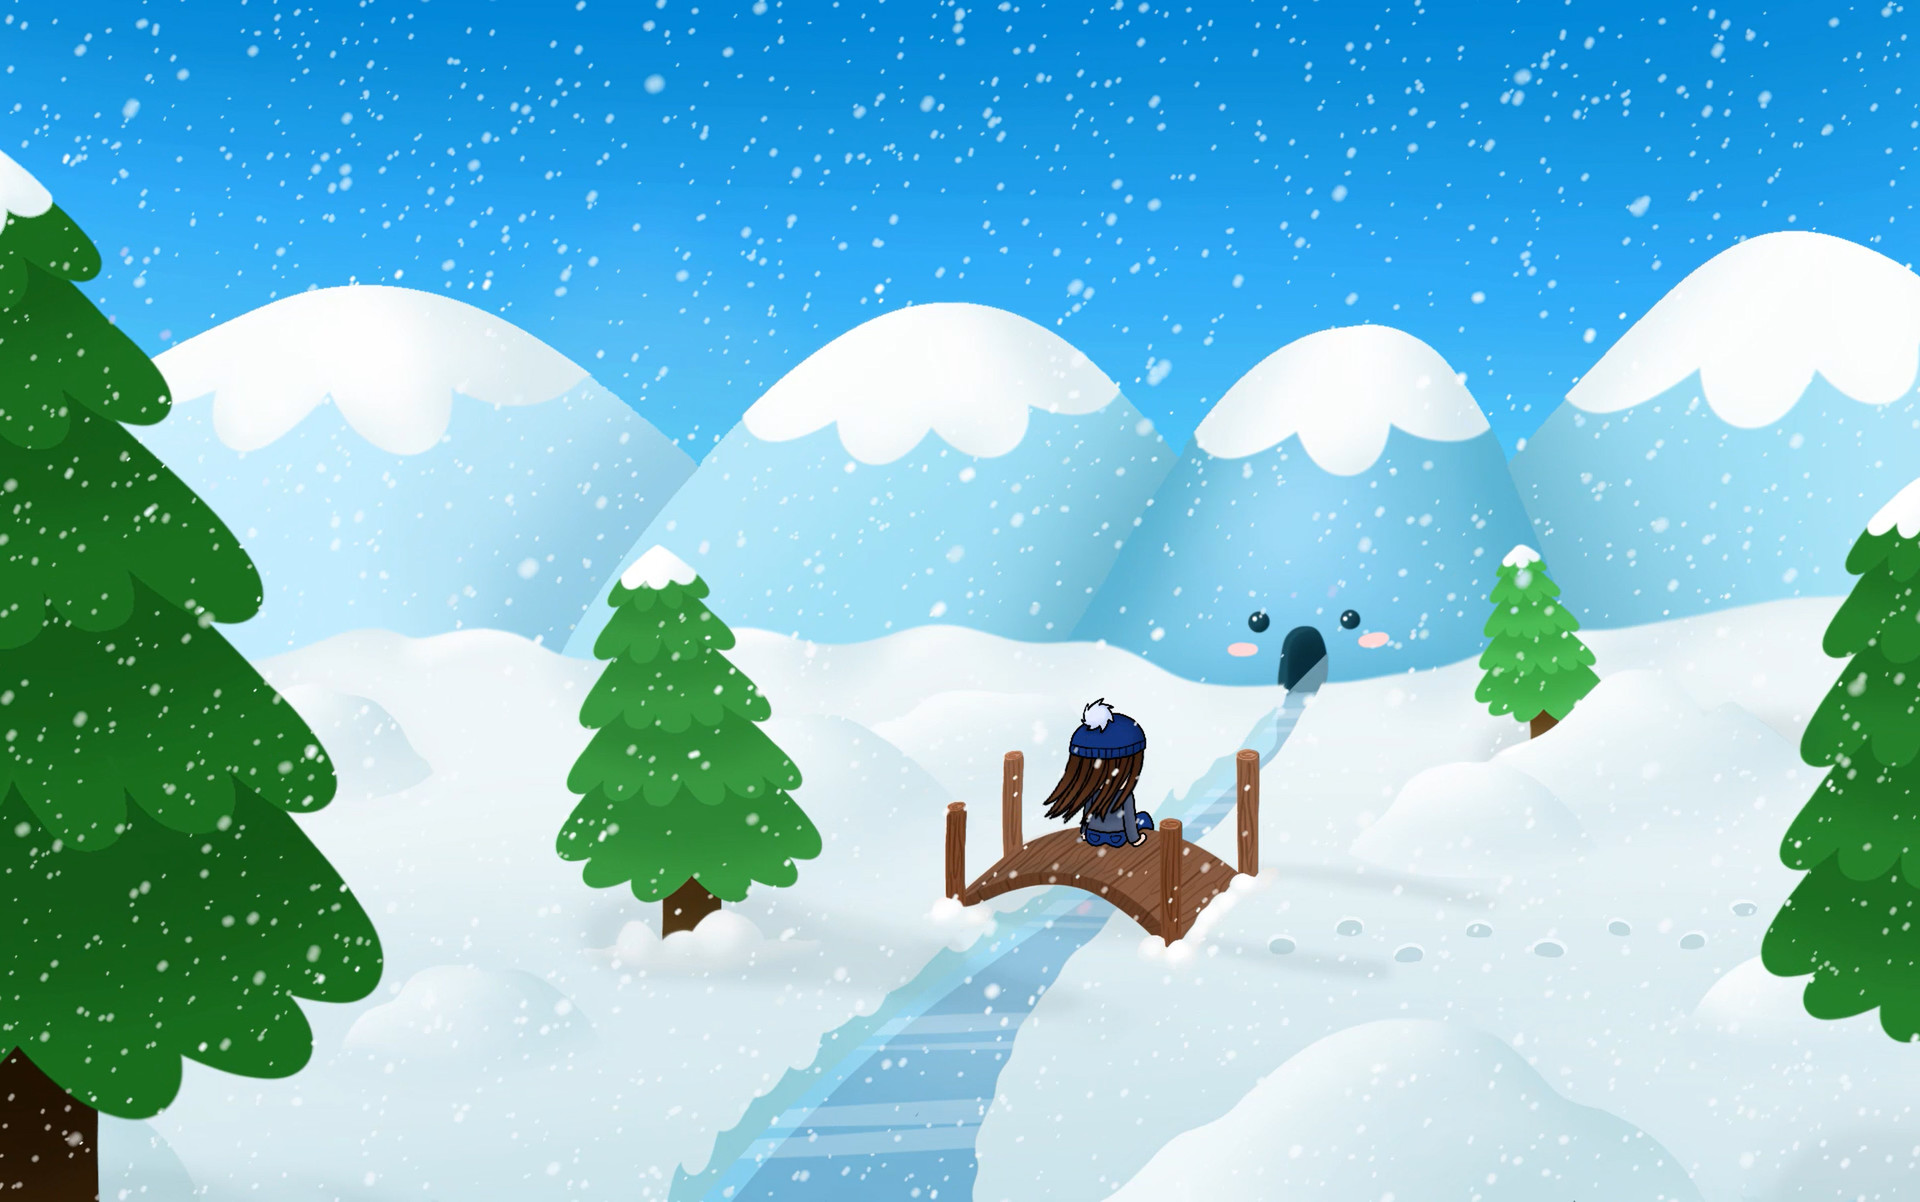 ArtStation - Animated Winter Landscape